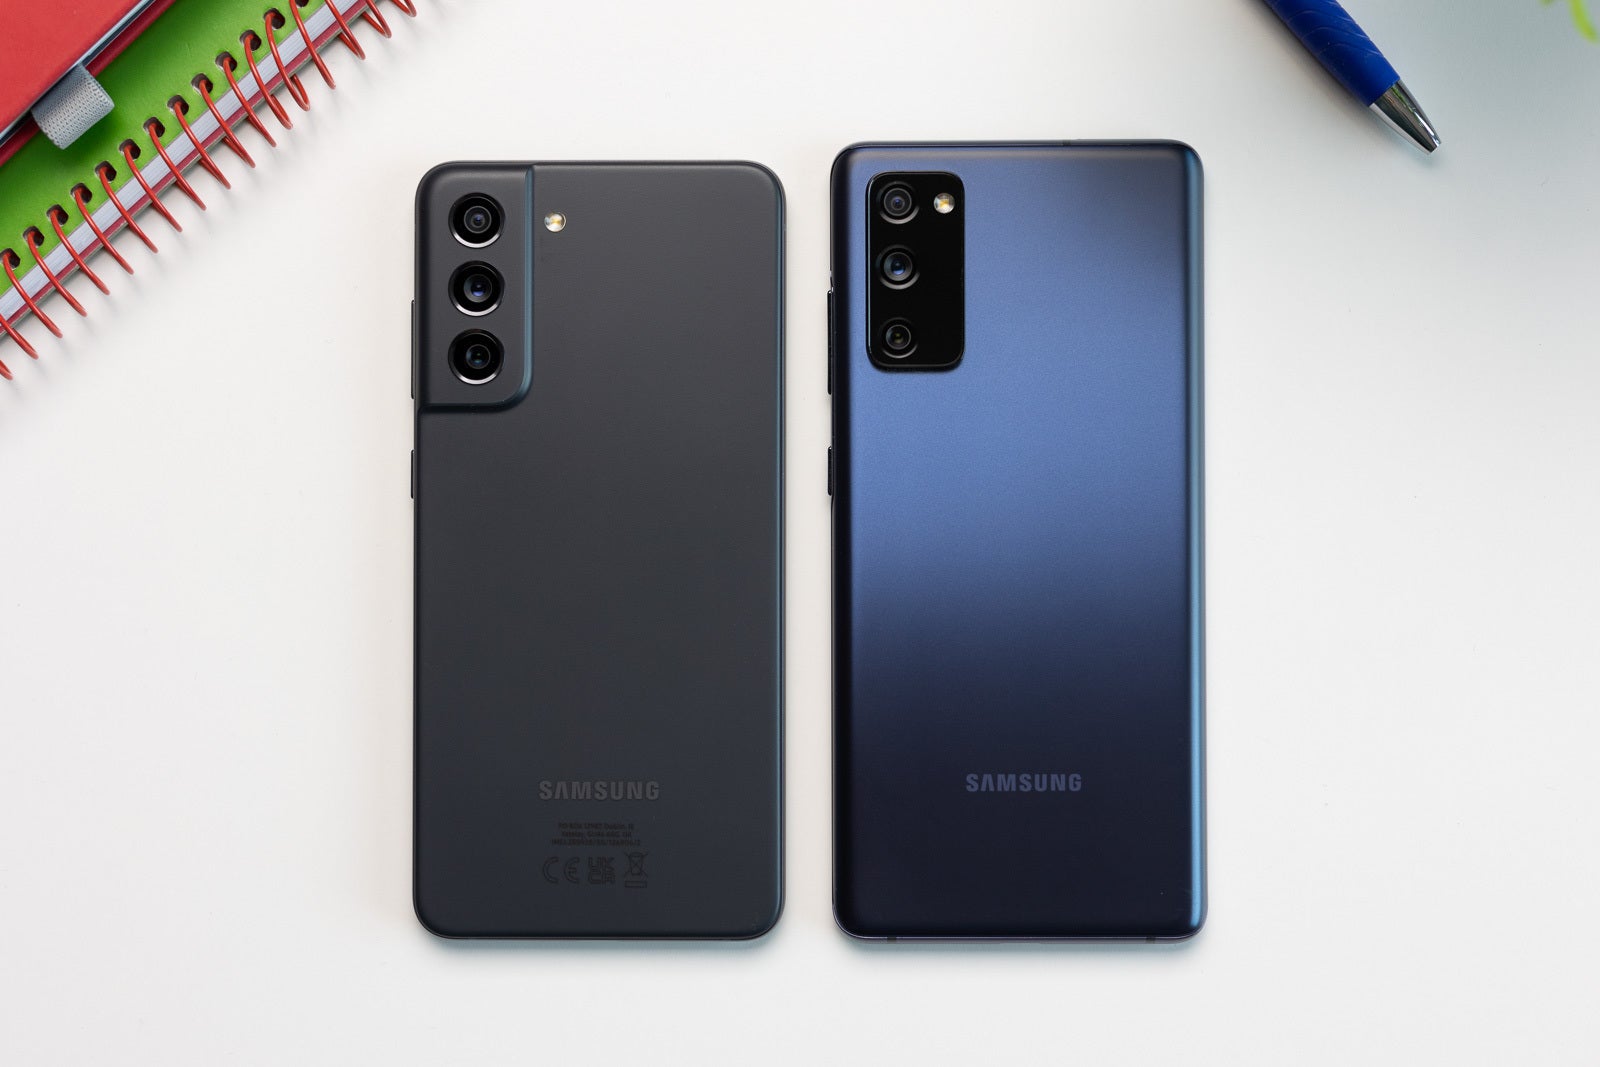 Samsung Galaxy S21 FE vs Galaxy S20 FE